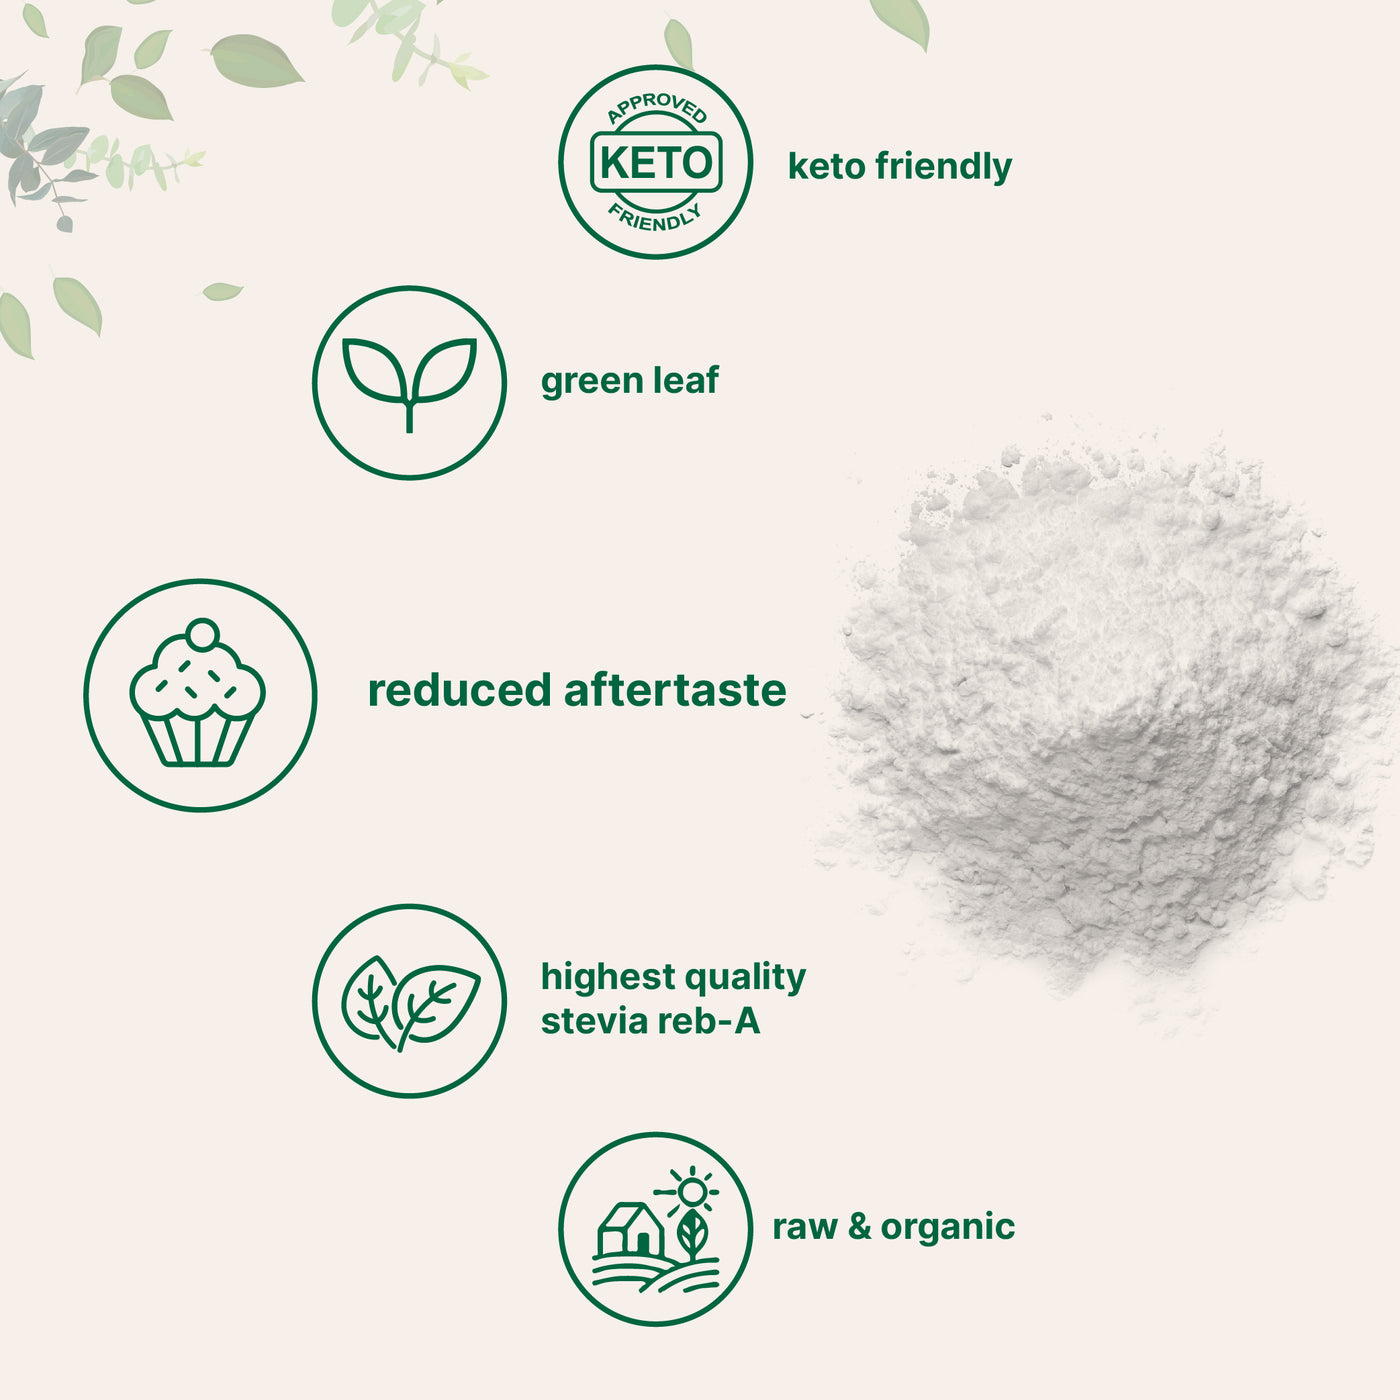 Organic Stevia Powder 8 Ounce